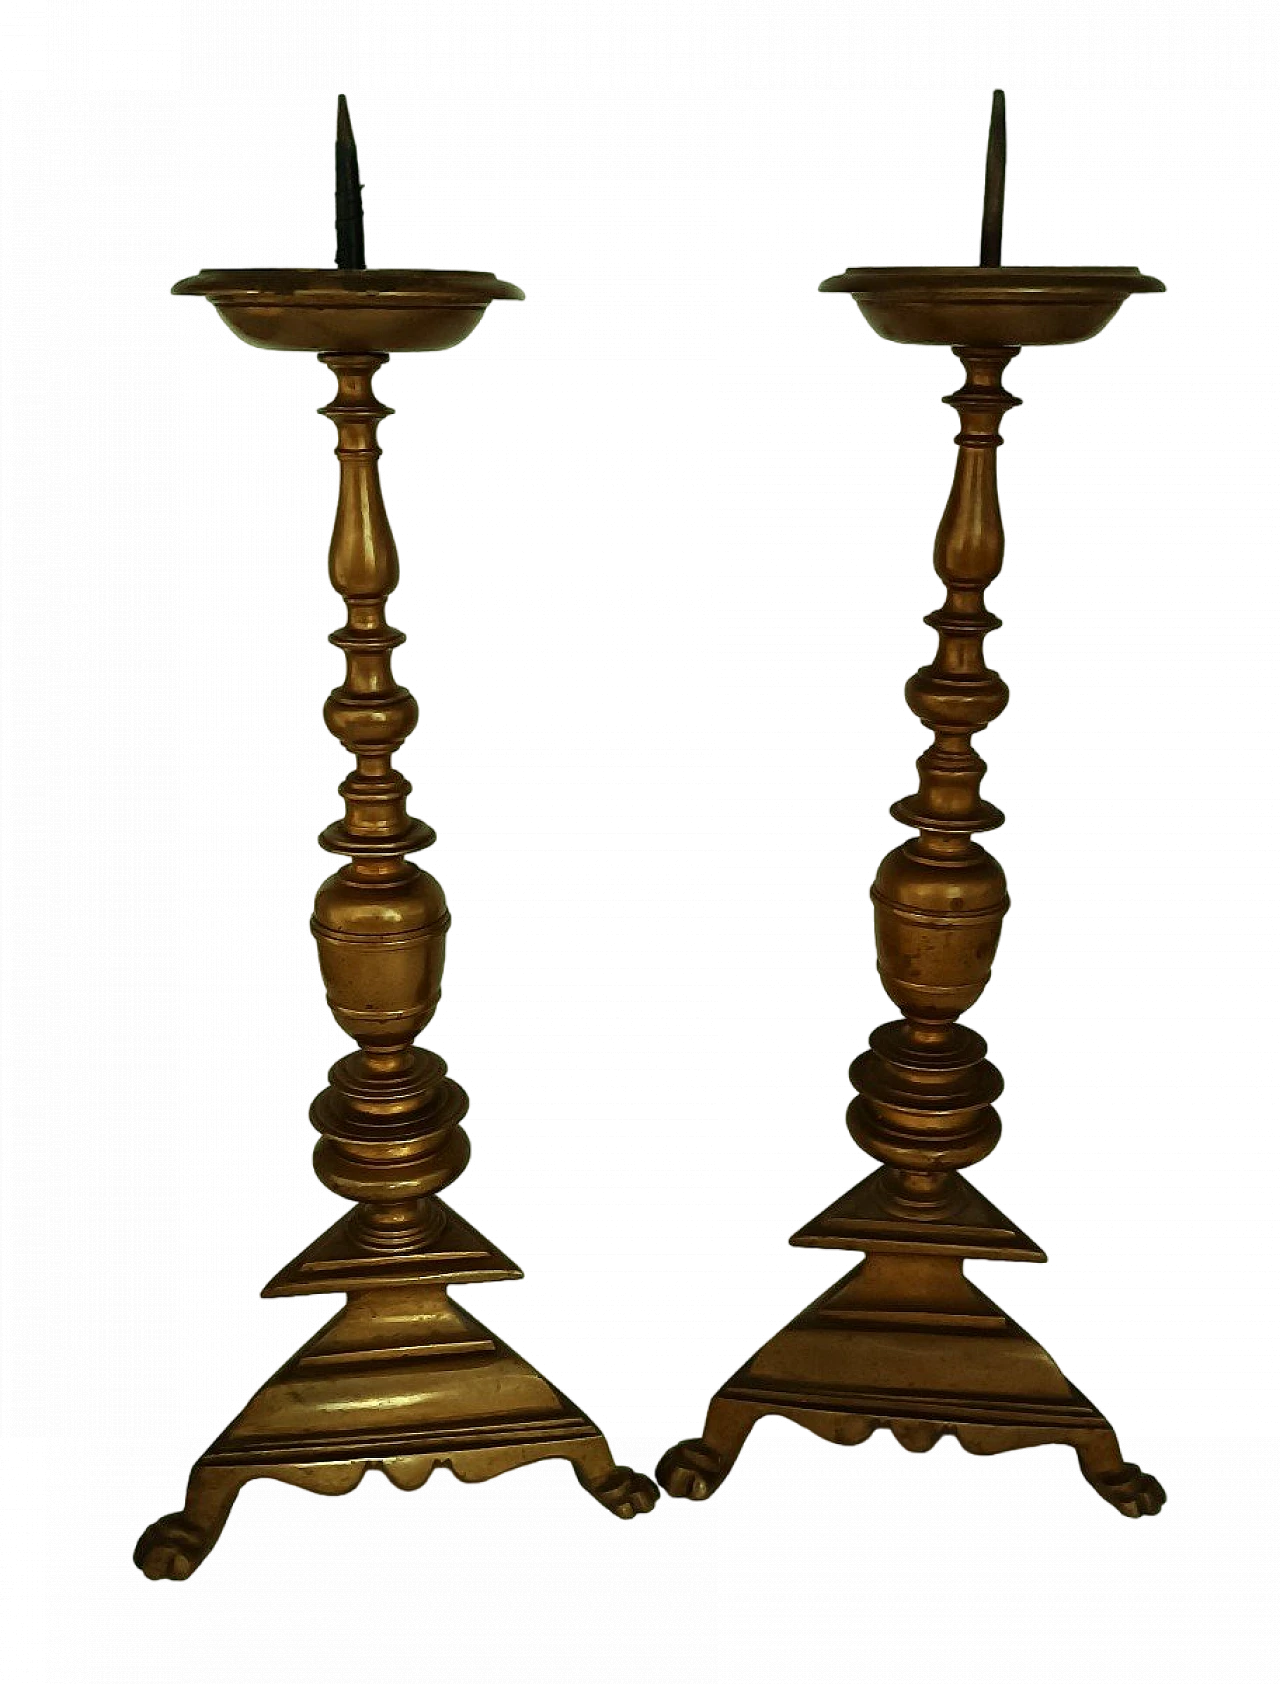 Pair of bronze candlesticks, 17th century 8